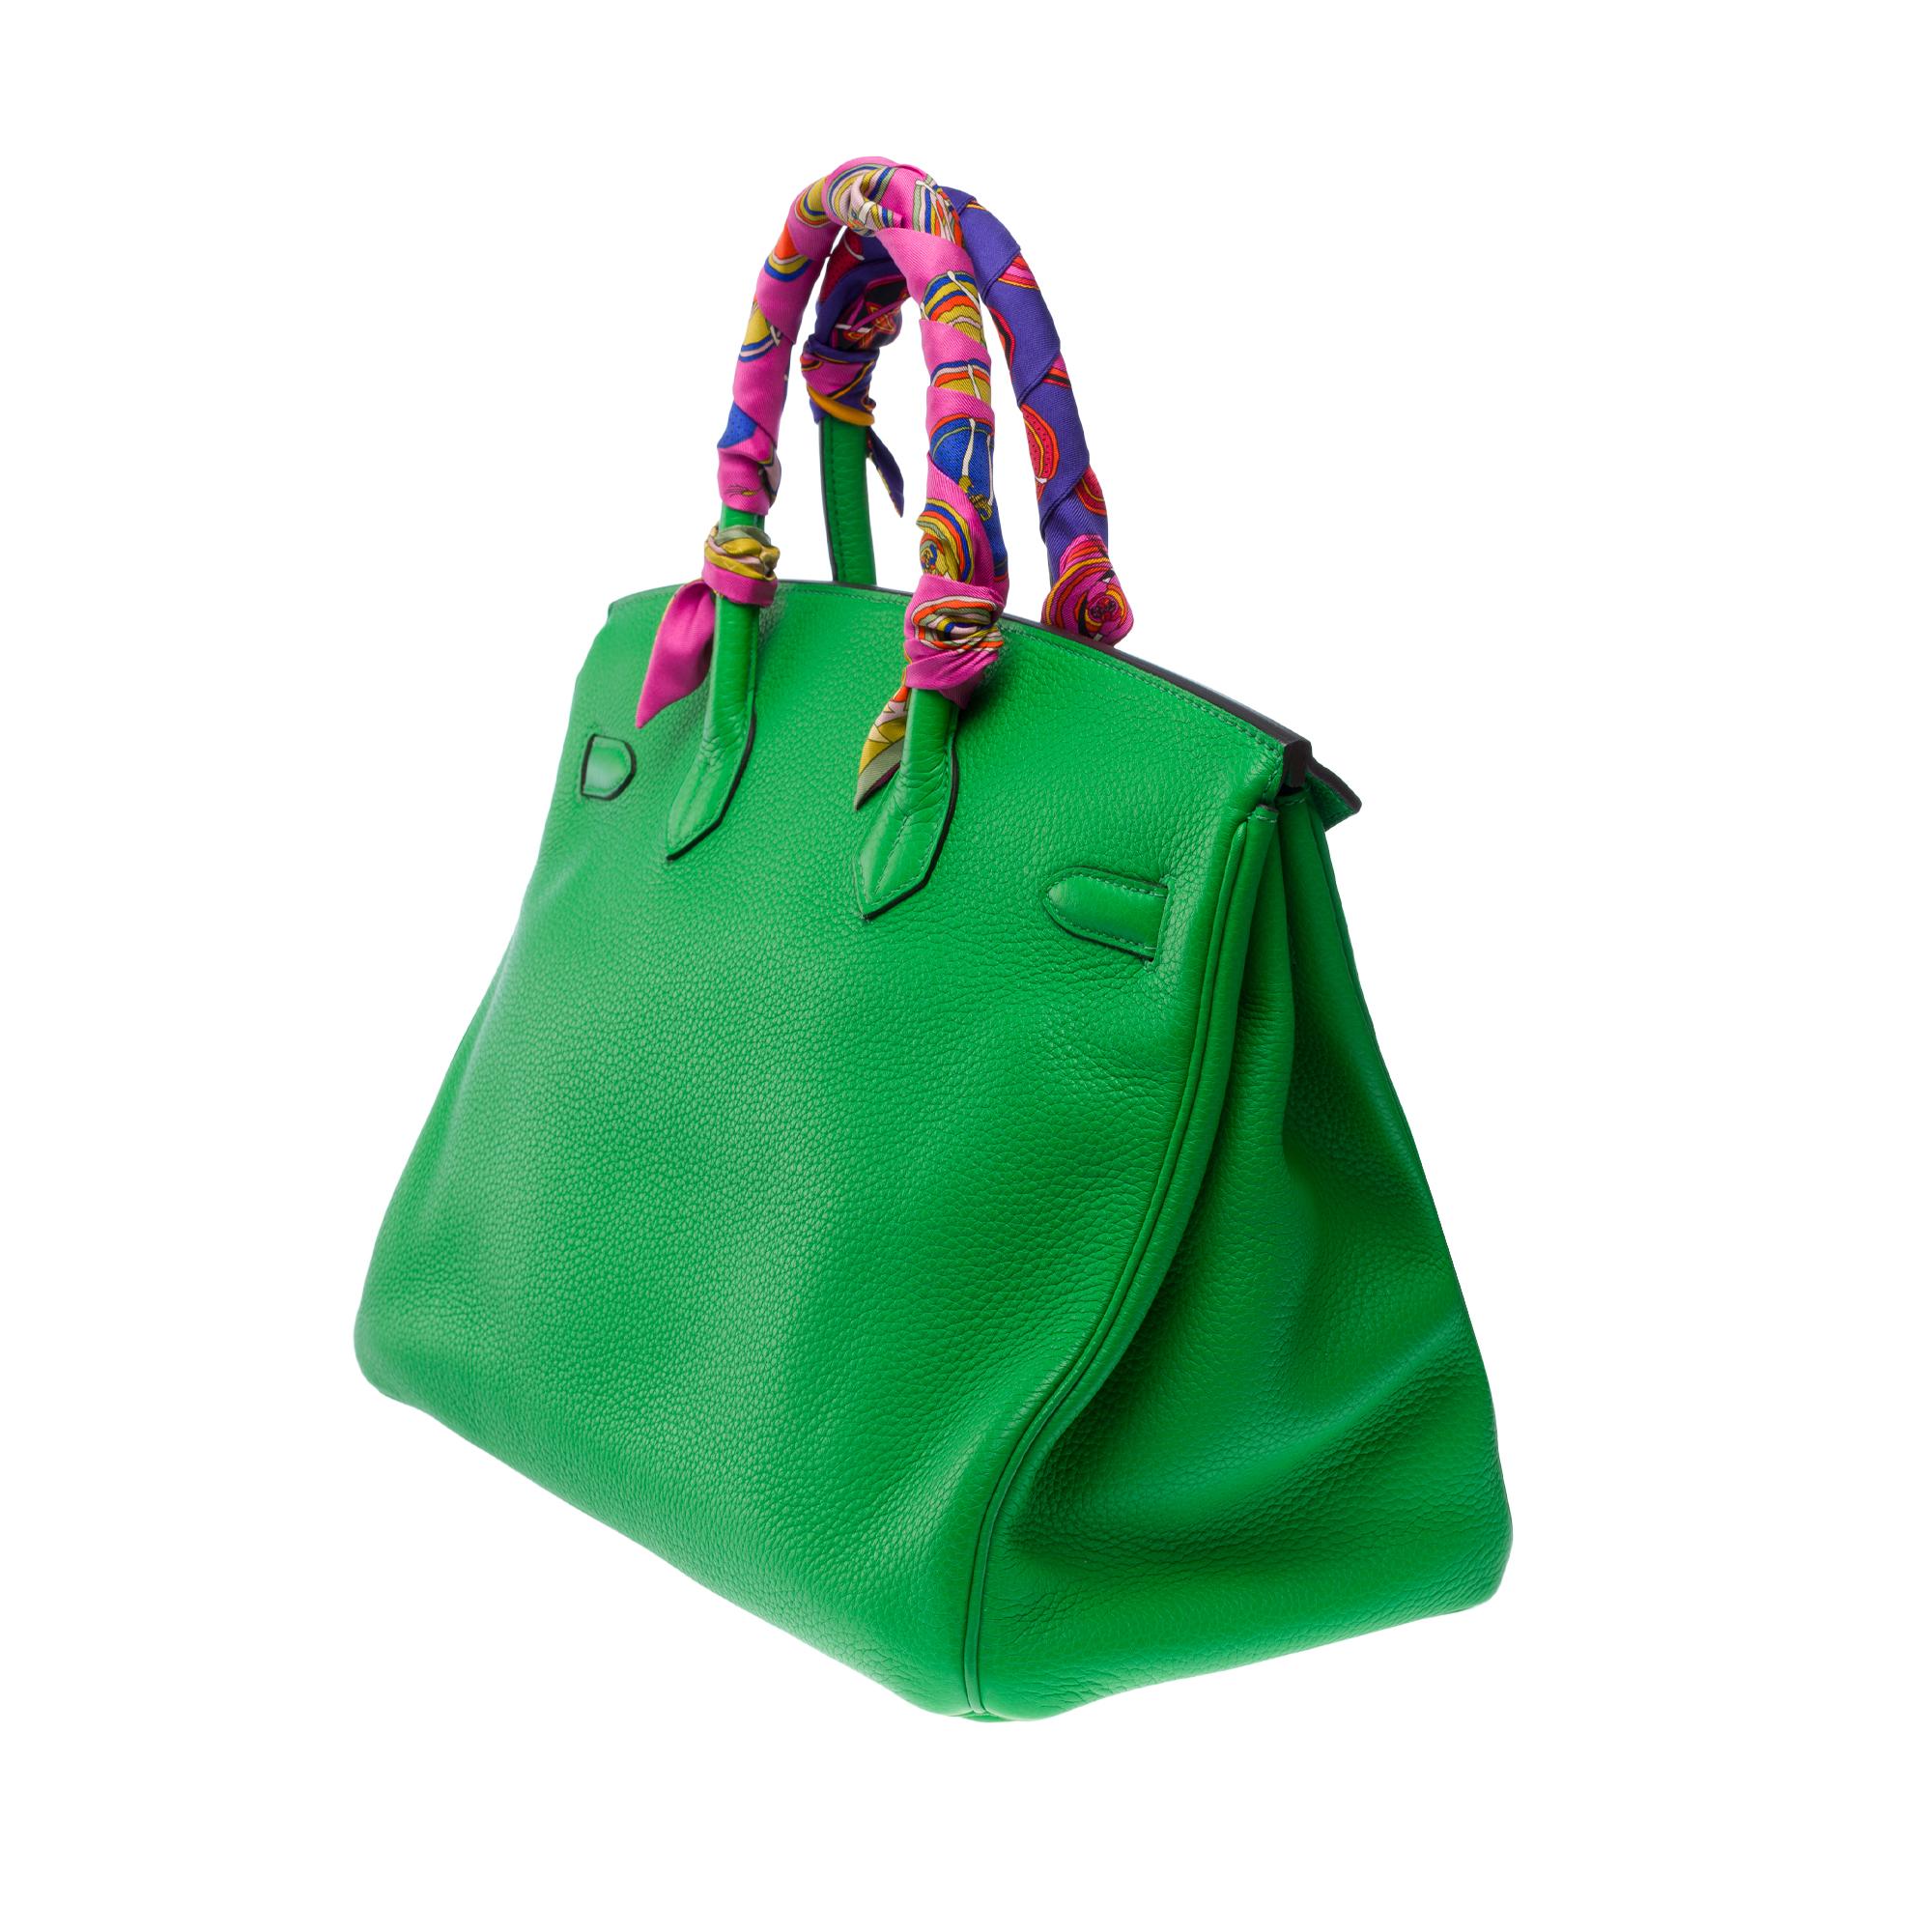 Fantastic Hermès Birkin 35 handbag in Green Bamboo Togo leather, SHW 1